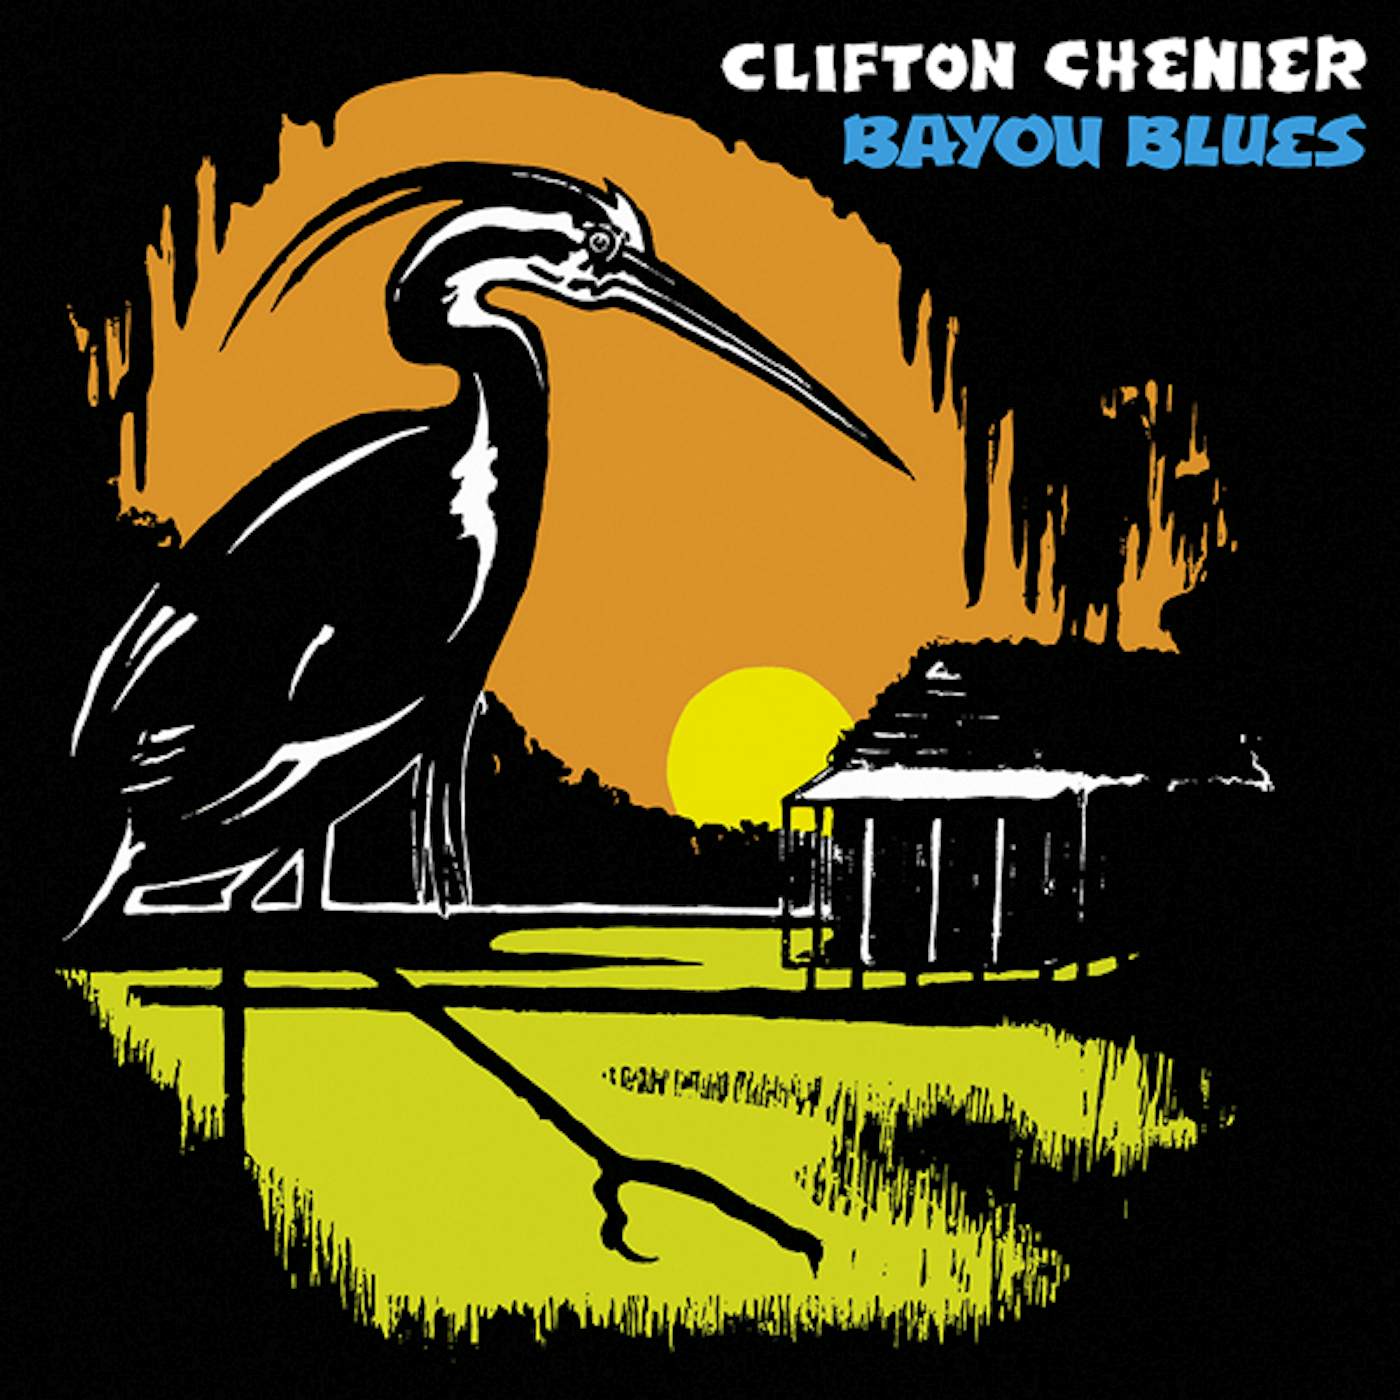 Clifton Chenier Bayou Blues Vinyl Record